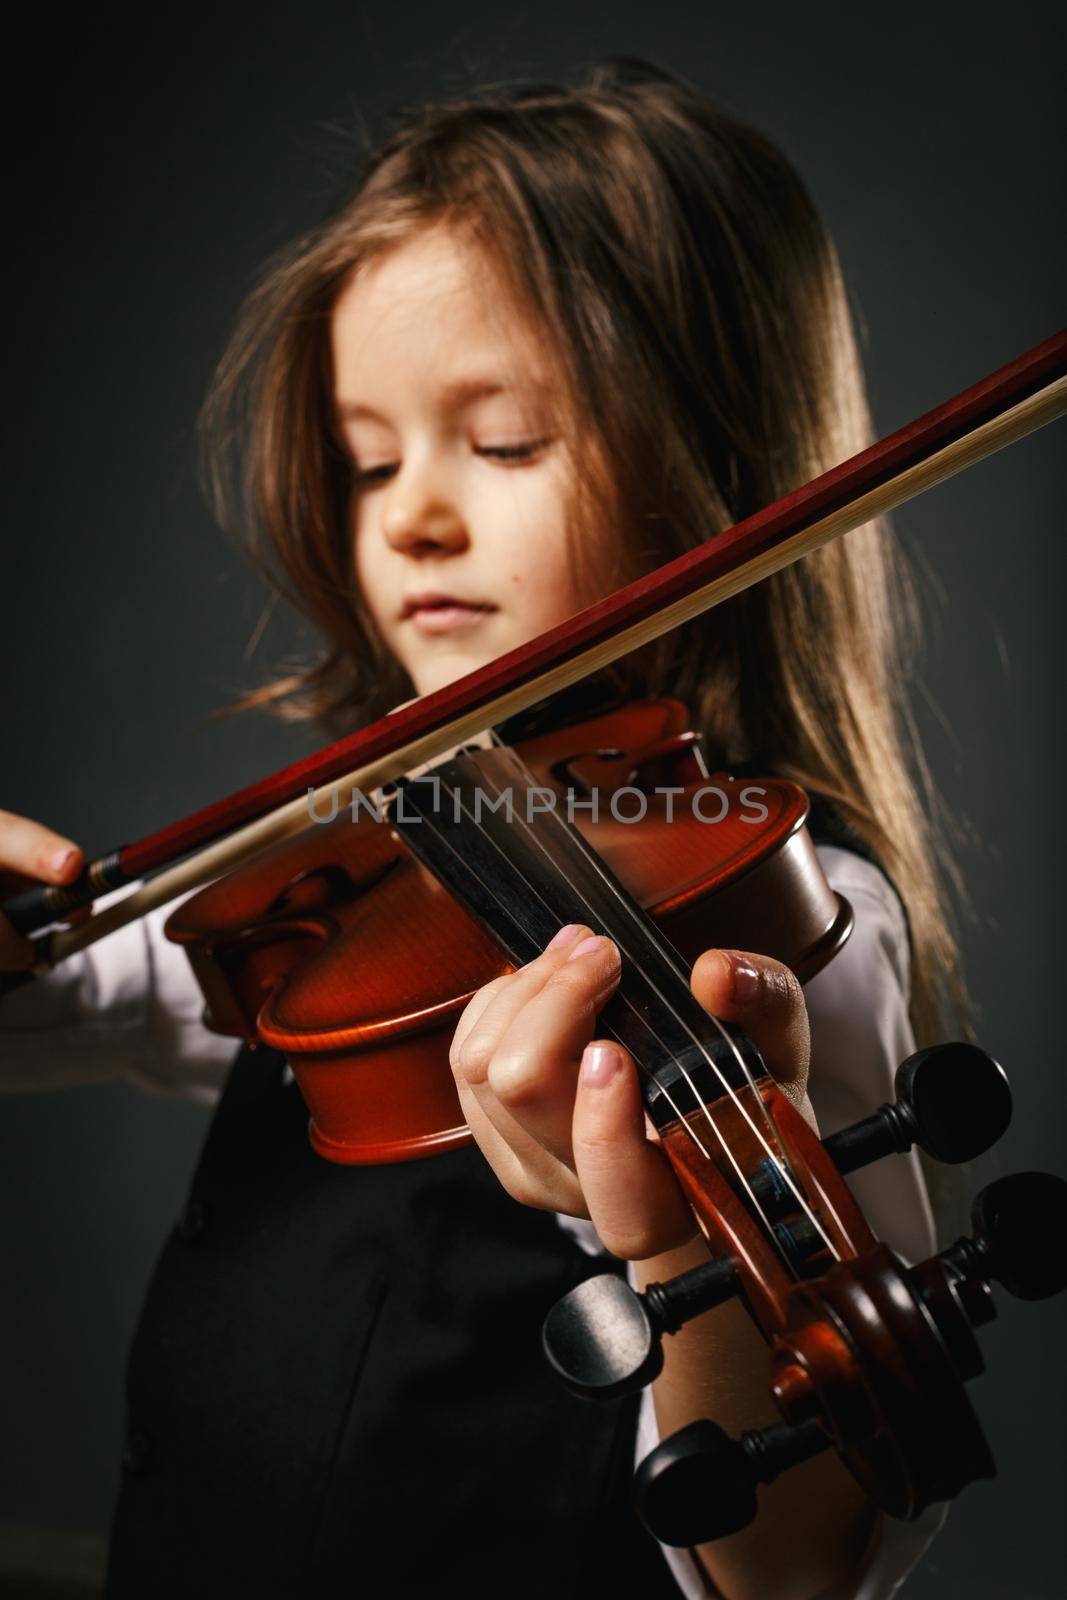 Beautiful girl with long hair and closed eyes playing violin